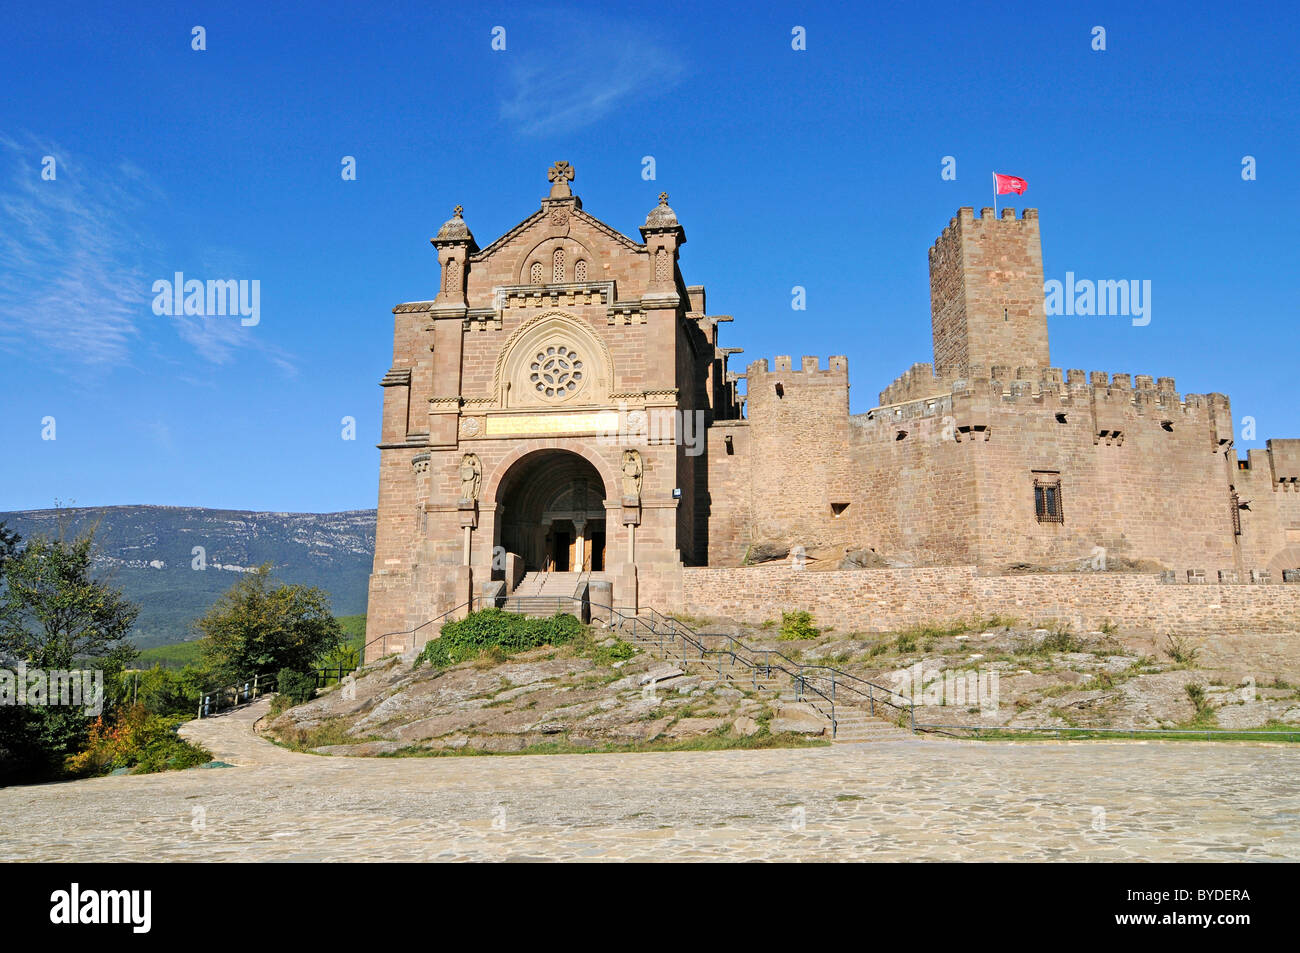 Castillo de Javier, castle, museum, Javier, Pamplona, Navarra, Spain, Europe Stock Photo